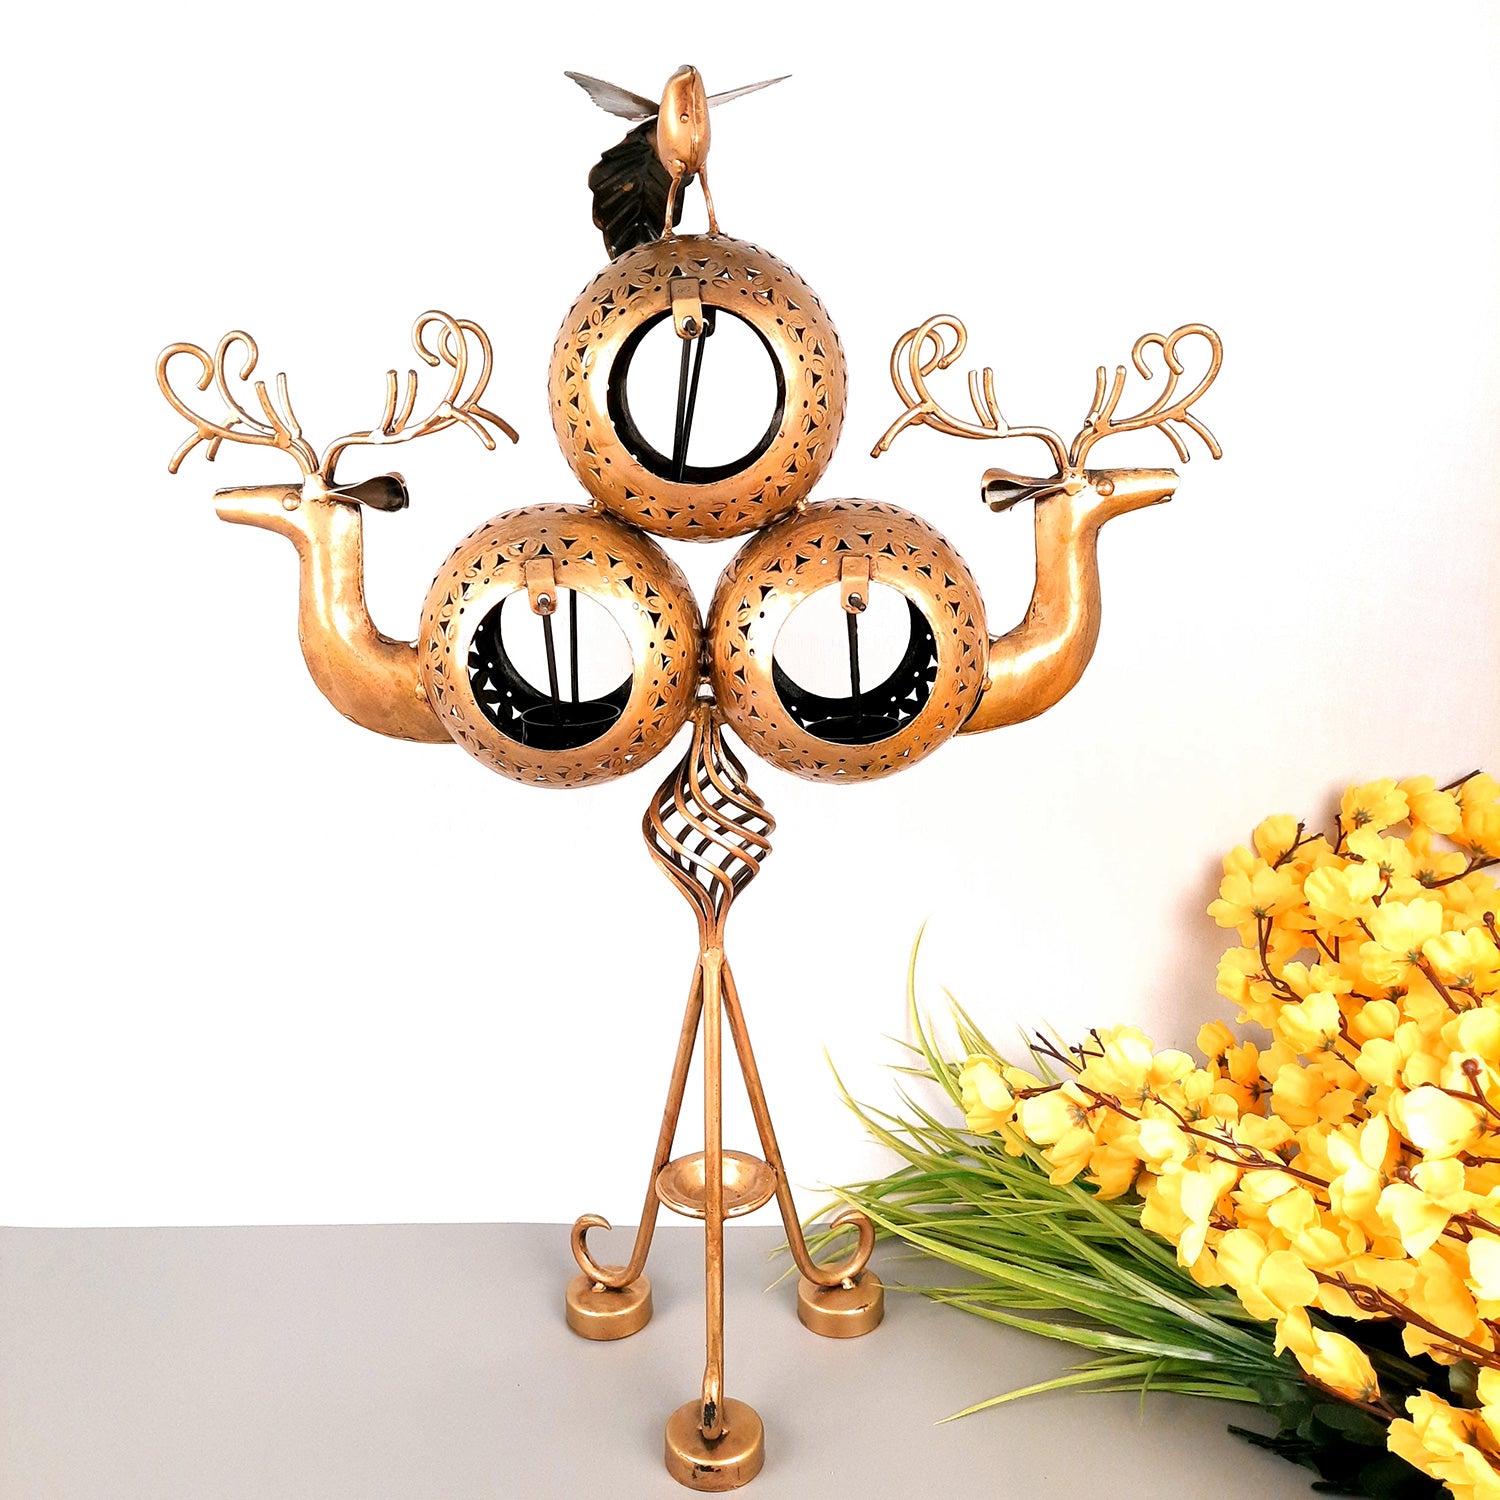 Tealight Holder Cum Decorative Showpiece - Deer Design | T Light Candle Stand with 3 Slots - For Home, Living Room, Corner Decor & Gifts - 24 Inch - Apkamart